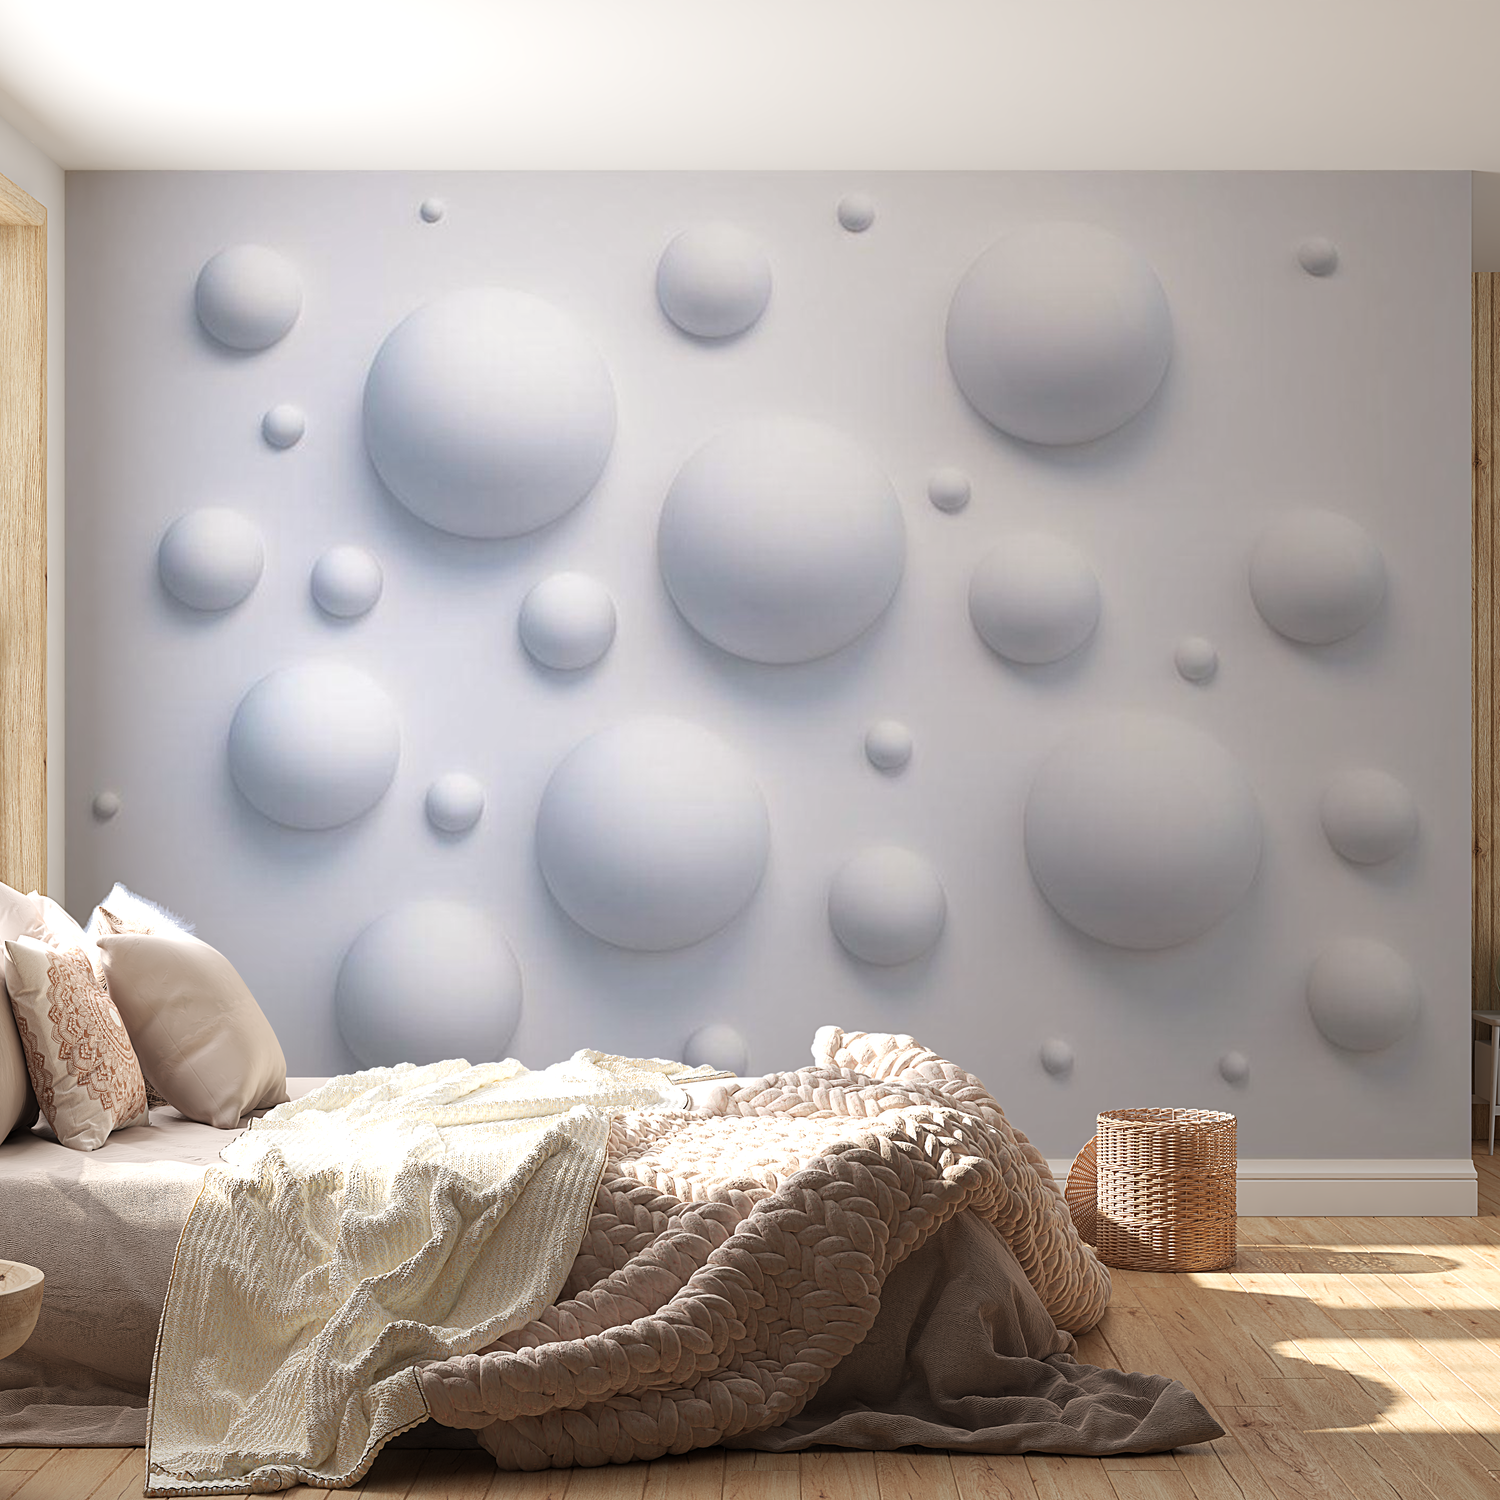 3D Illusion Wallpaper Wall Mural - Bubble Wall 39"Wx27"H